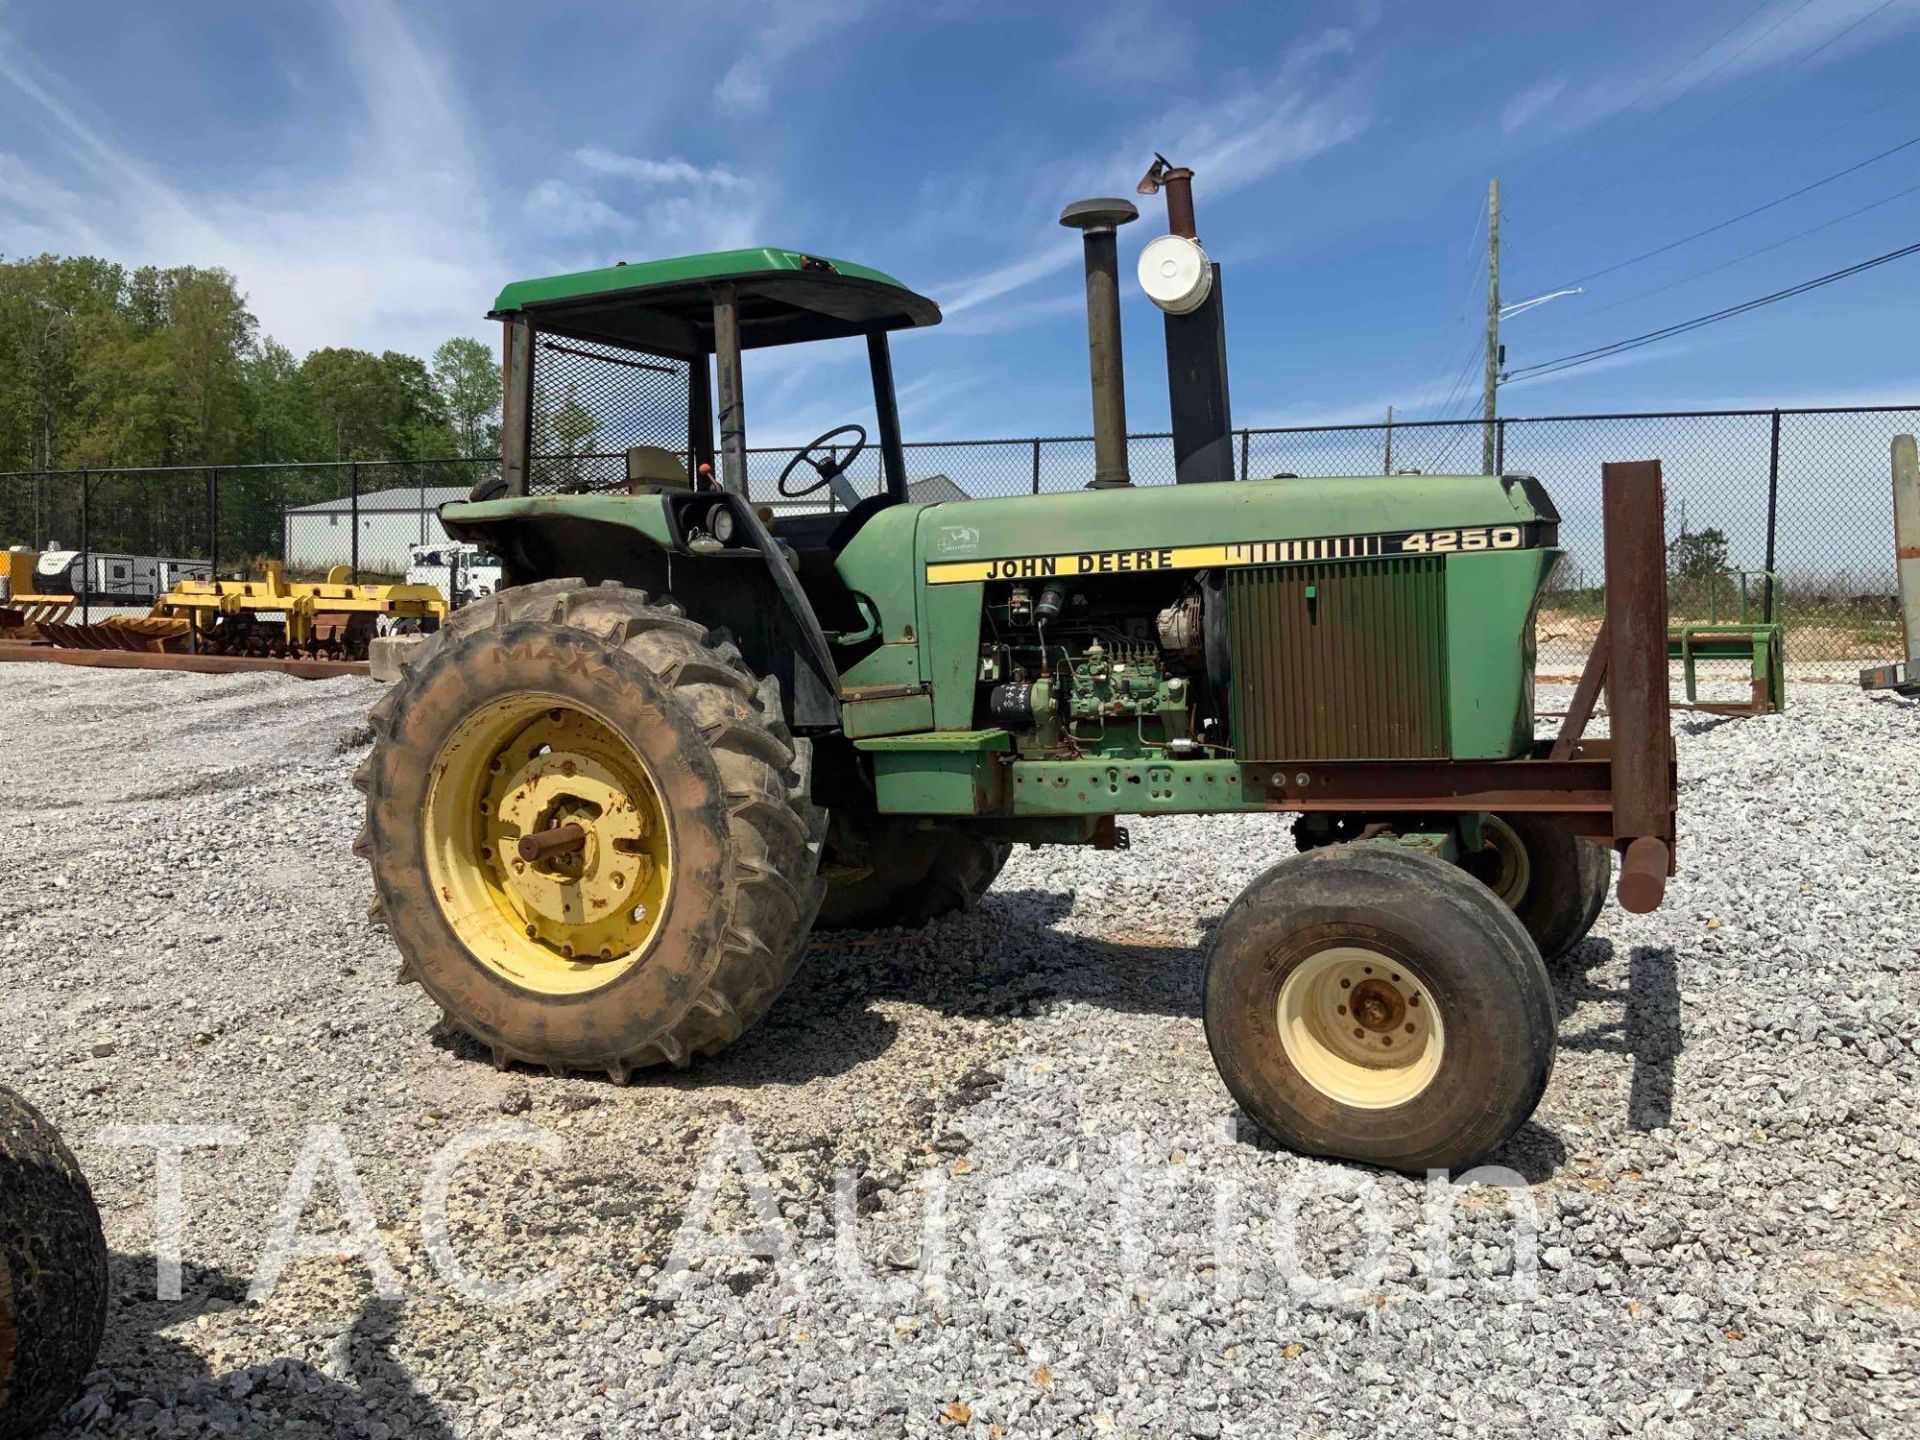 1985 John Deere 4250 Farm Tractor - Image 4 of 50